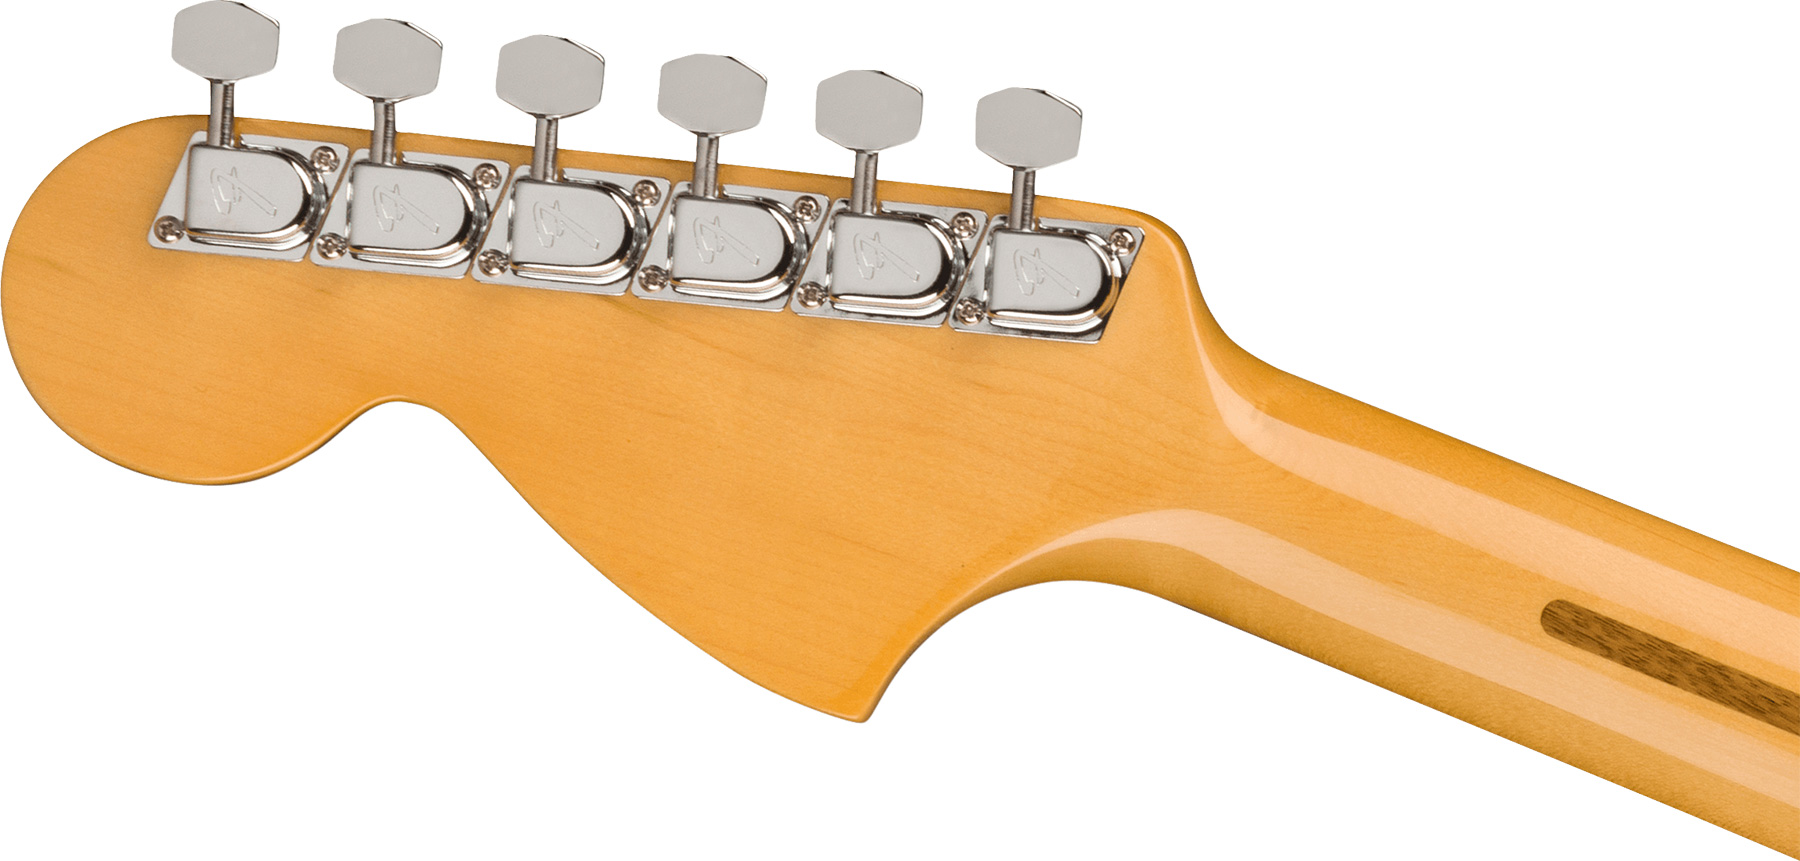 Fender Strat 1973 American Vintage Ii Usa 3s Trem Rw - Aged Natural - Guitarra eléctrica con forma de str. - Variation 3